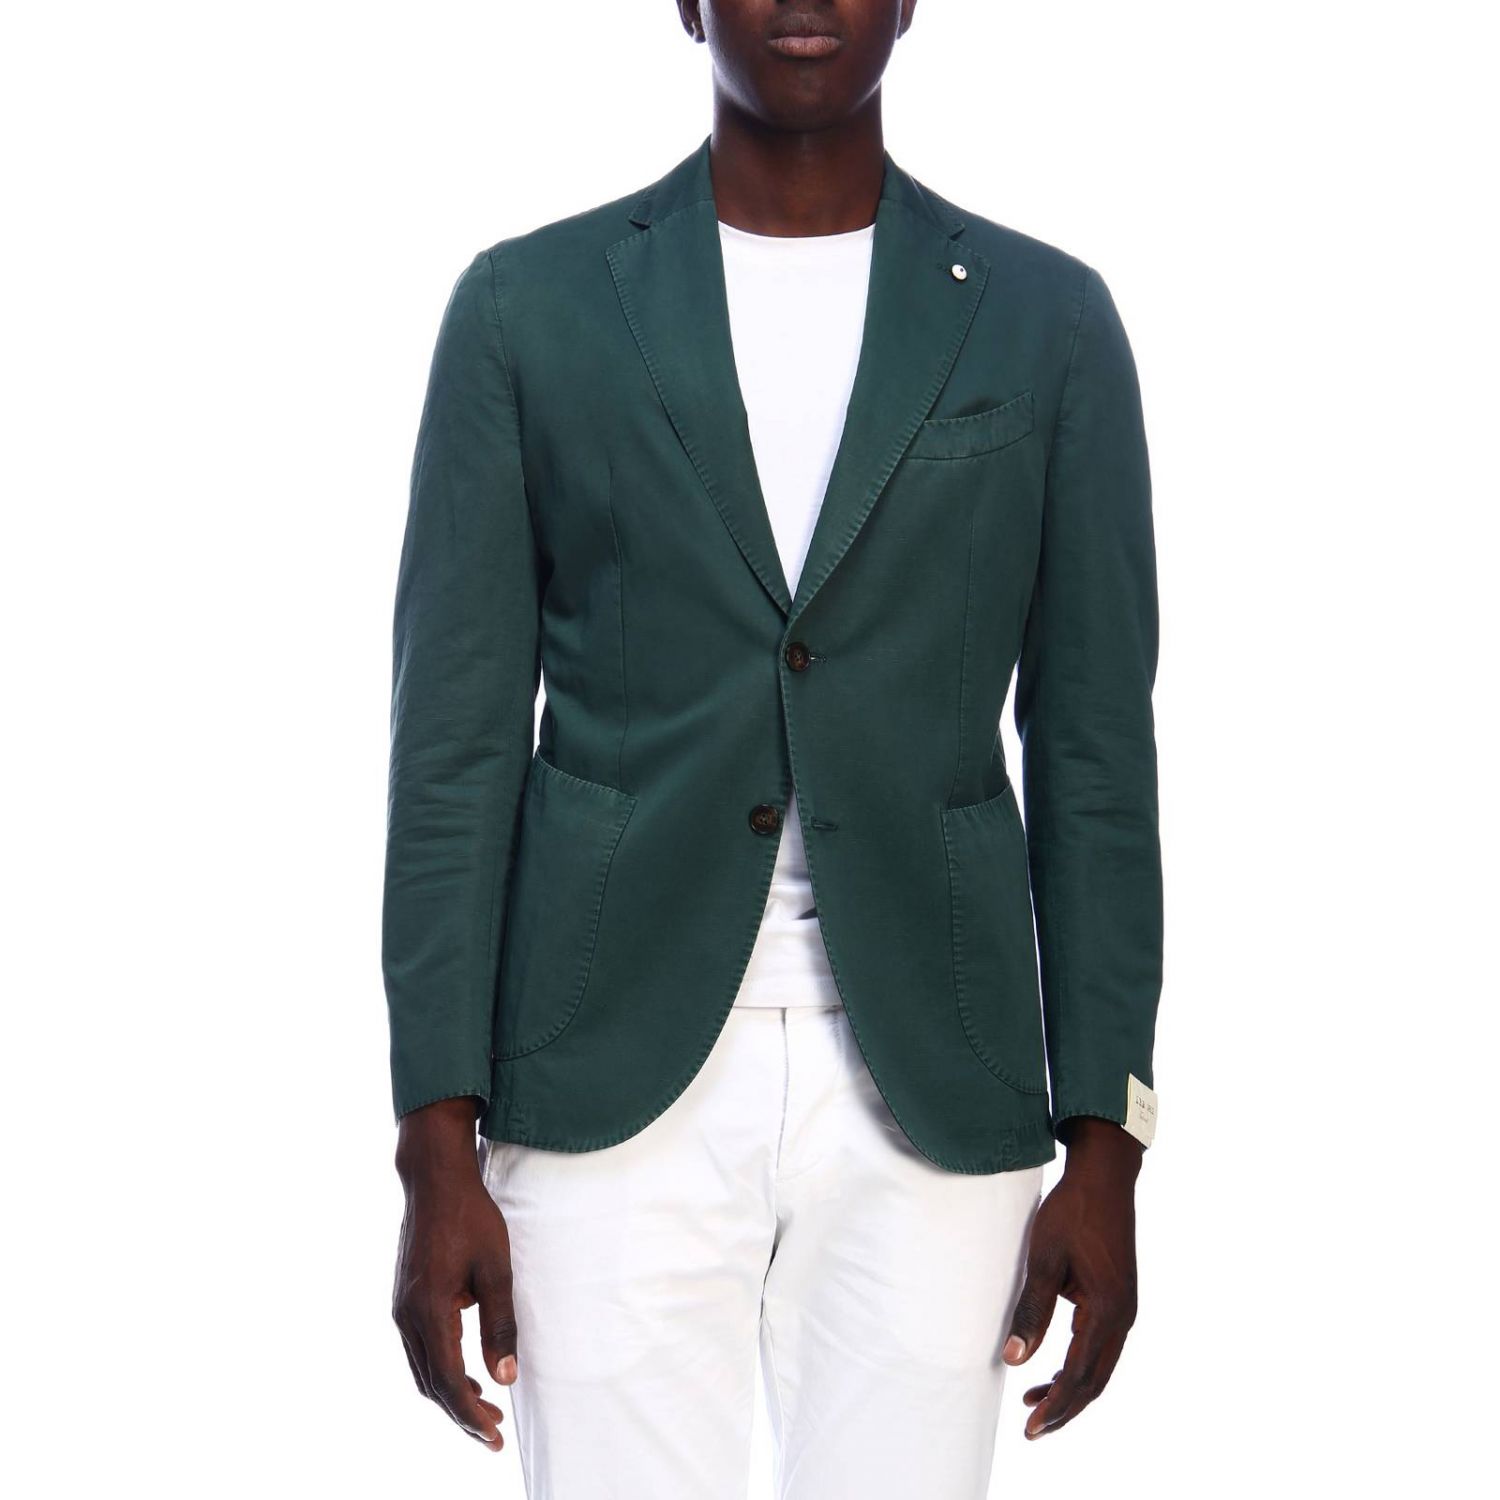 L.b.m. 1911 Outlet: jacket for man - Forest Green | L.b.m. 1911 jacket ...